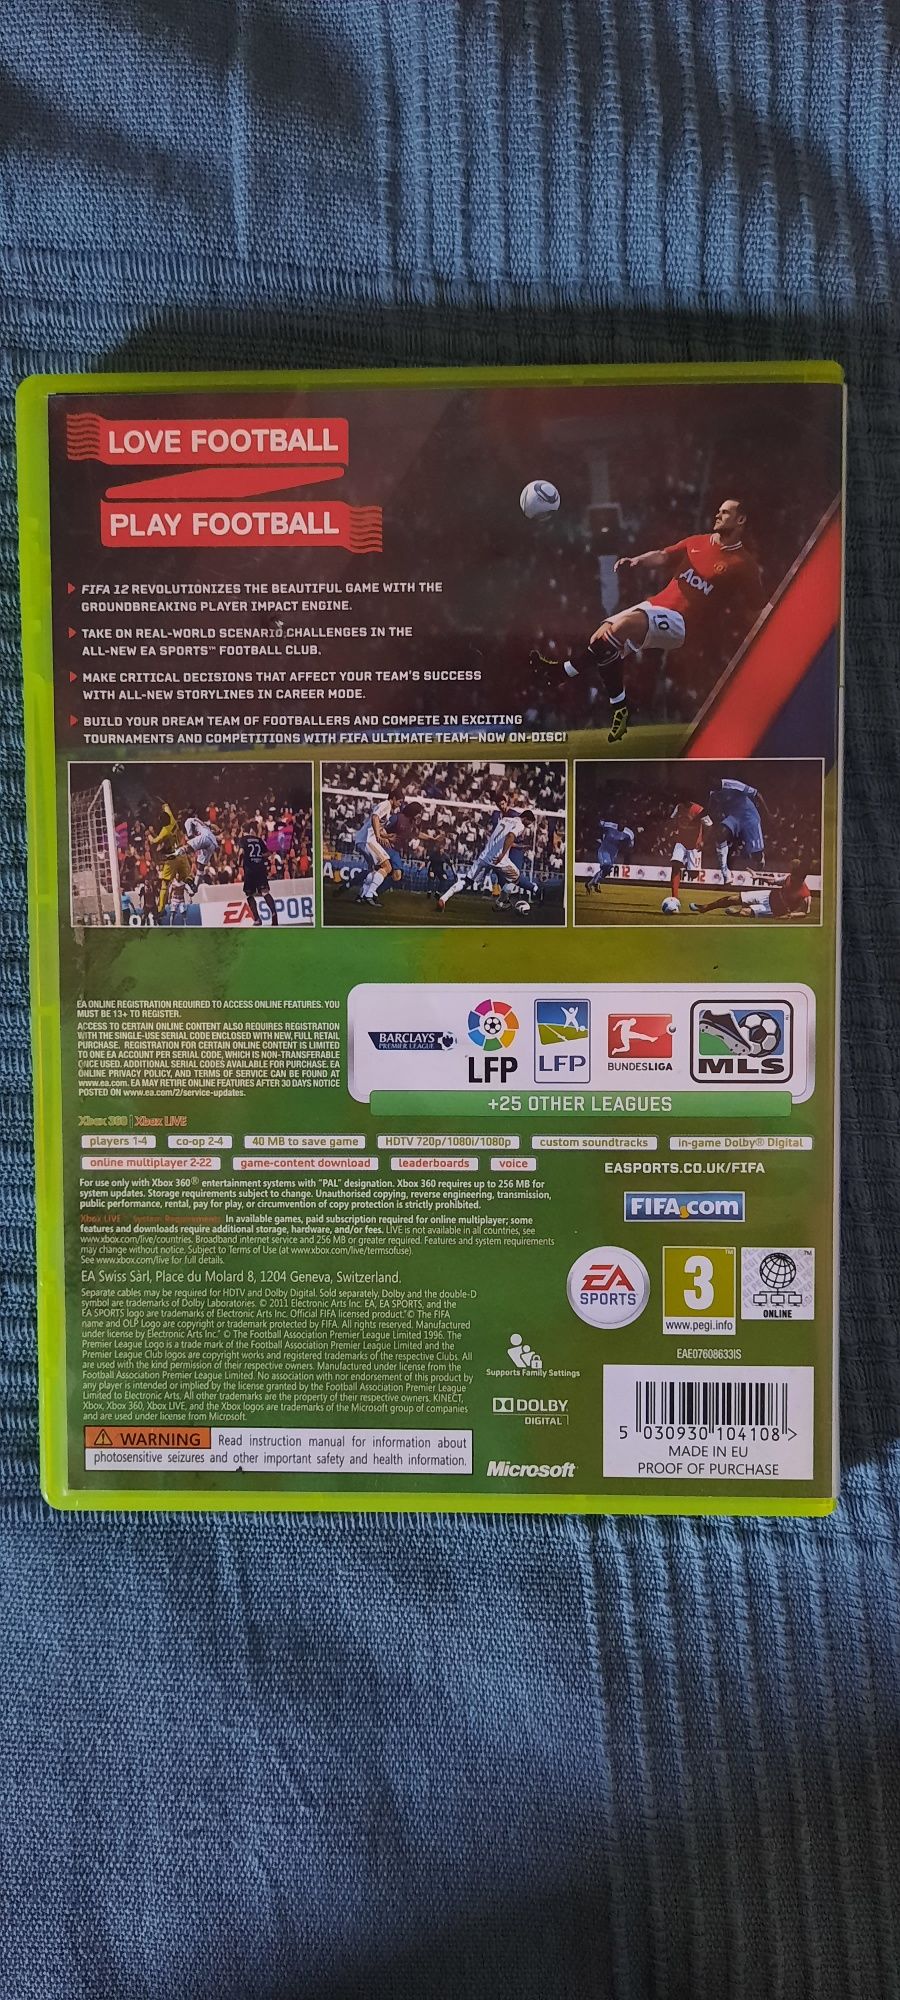 FIFA 12, gra Xbox 360